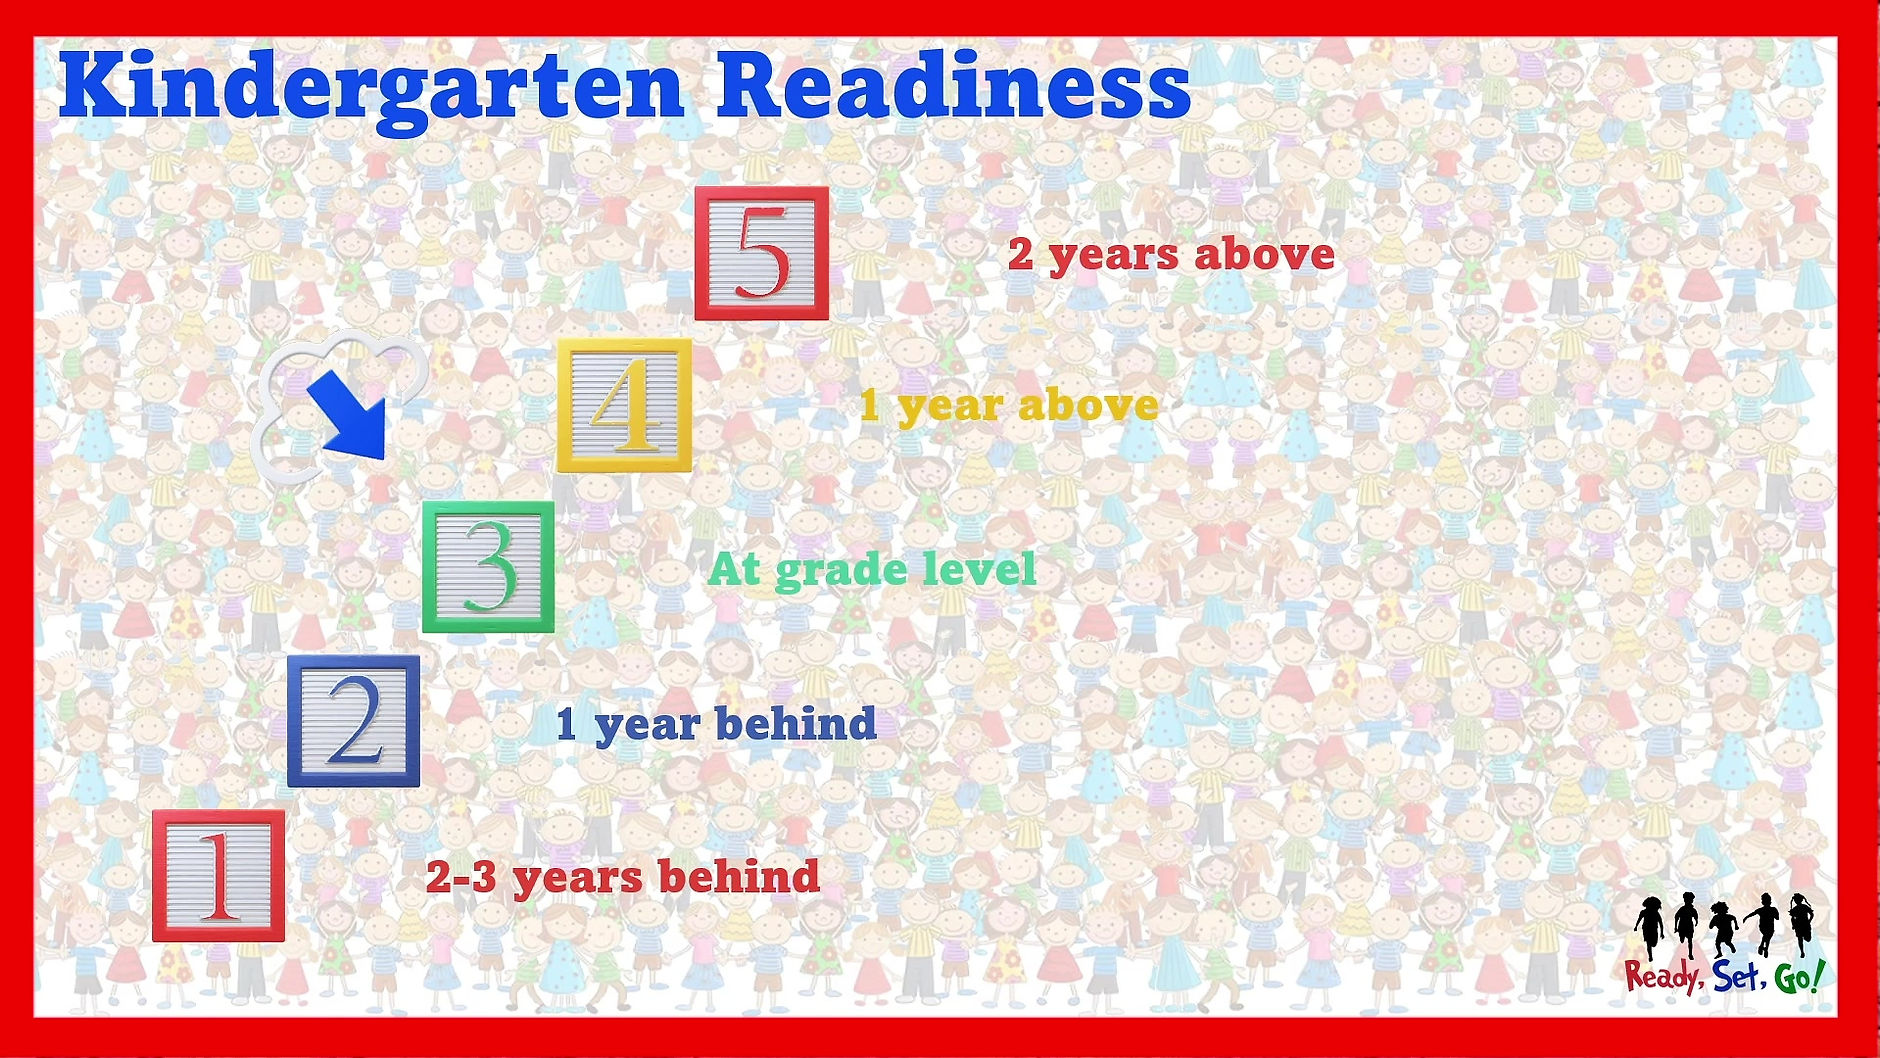 The Kindergarten Readiness Gap